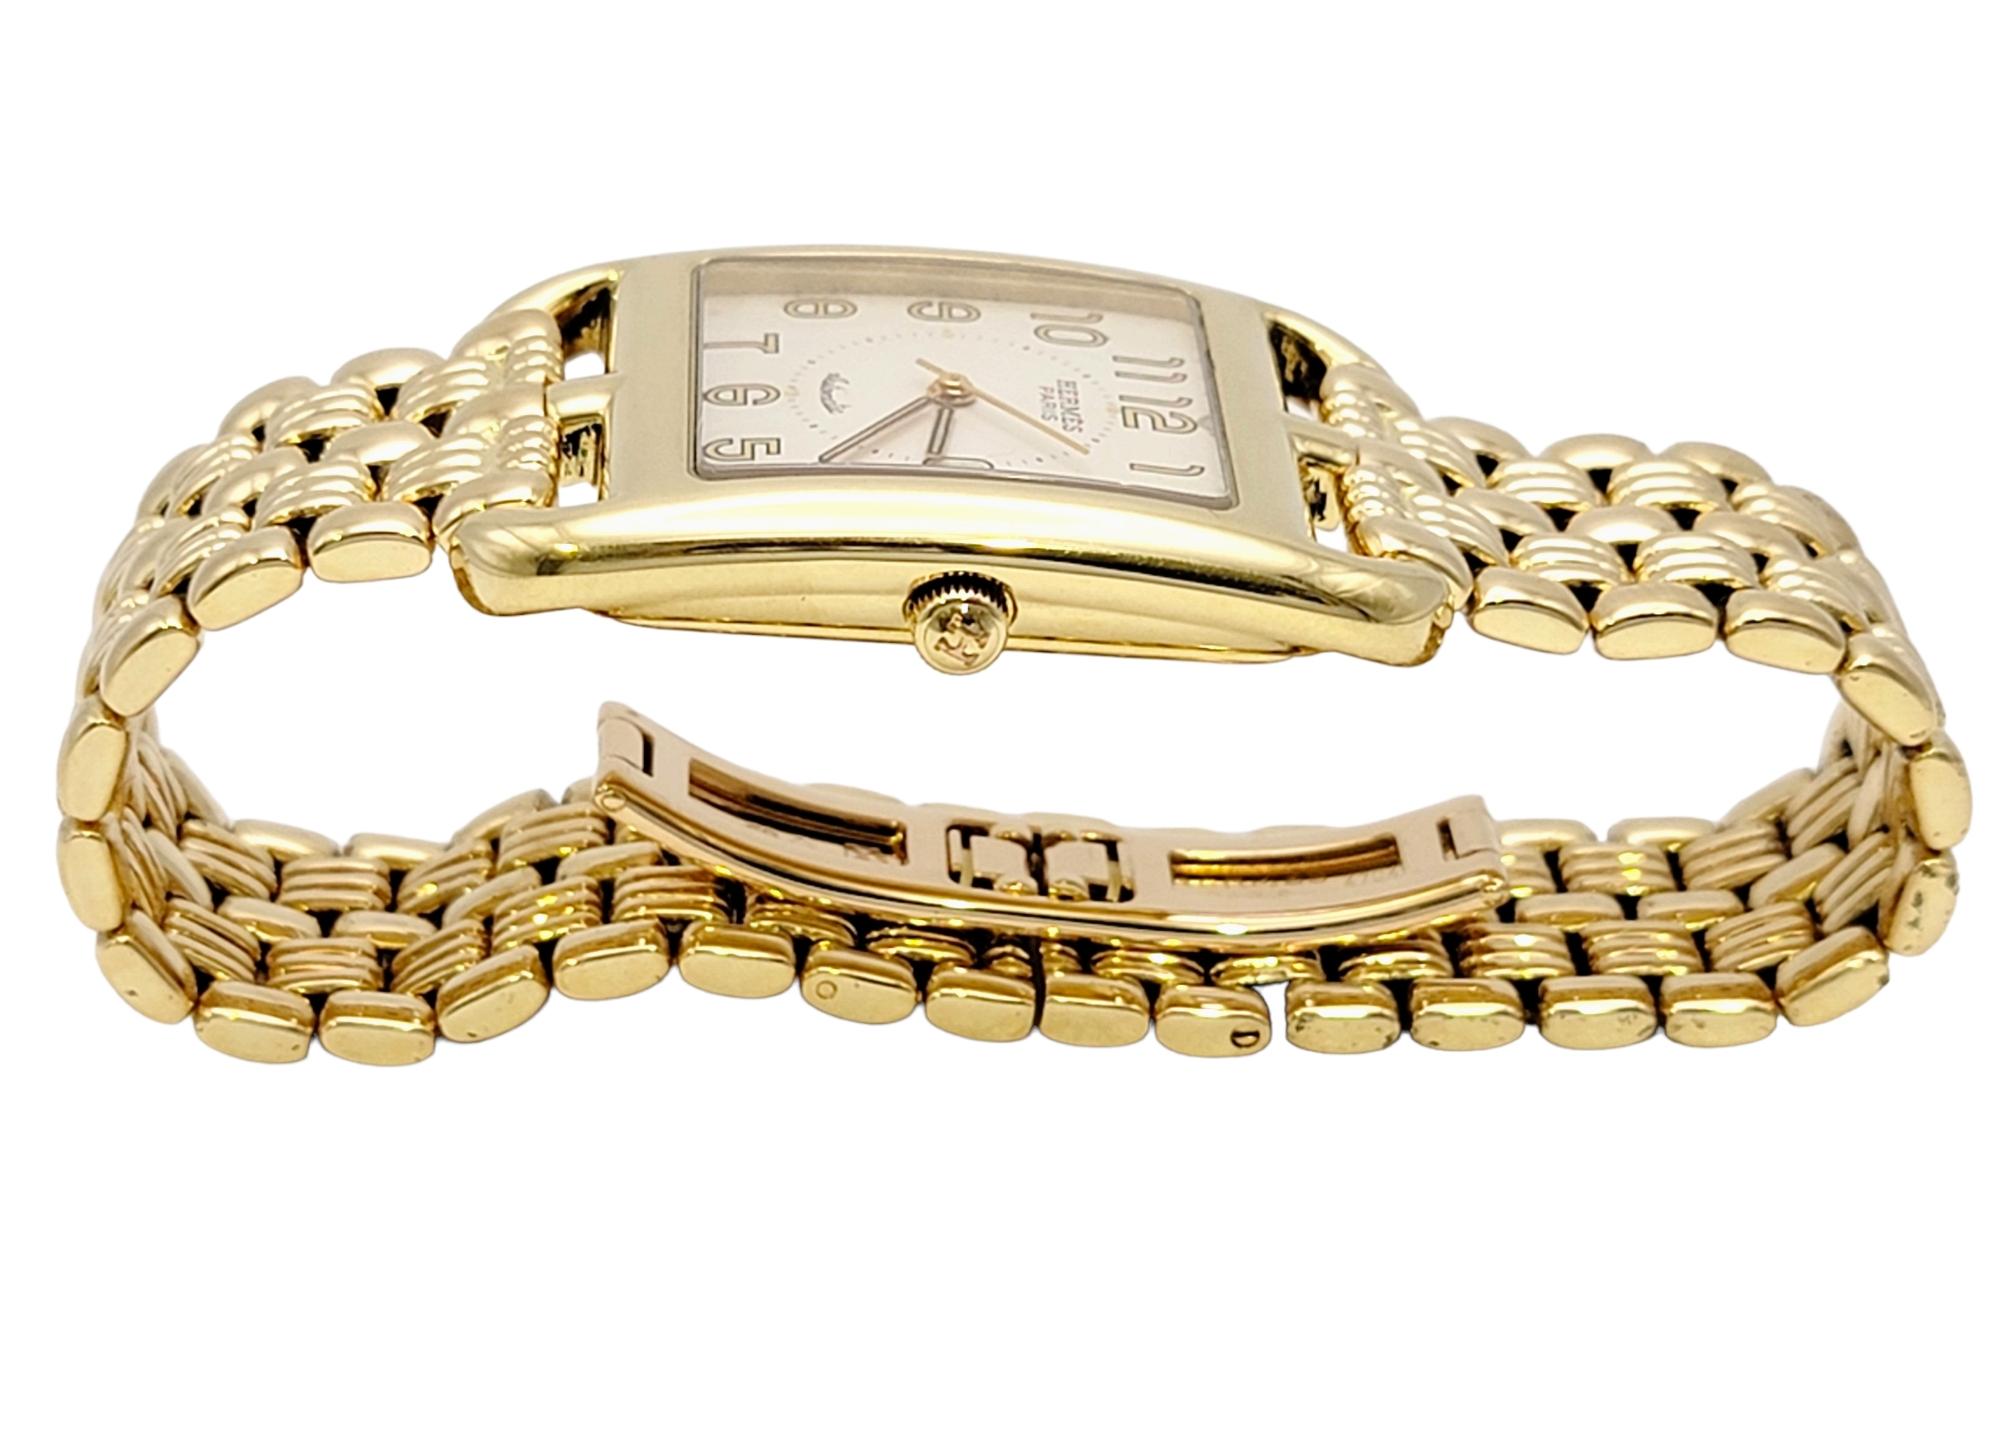 Contemporary Hermes Cape Cod Automatic Wristwatch 18 Karat Yellow Gold 31 Mm Rectangular Case For Sale